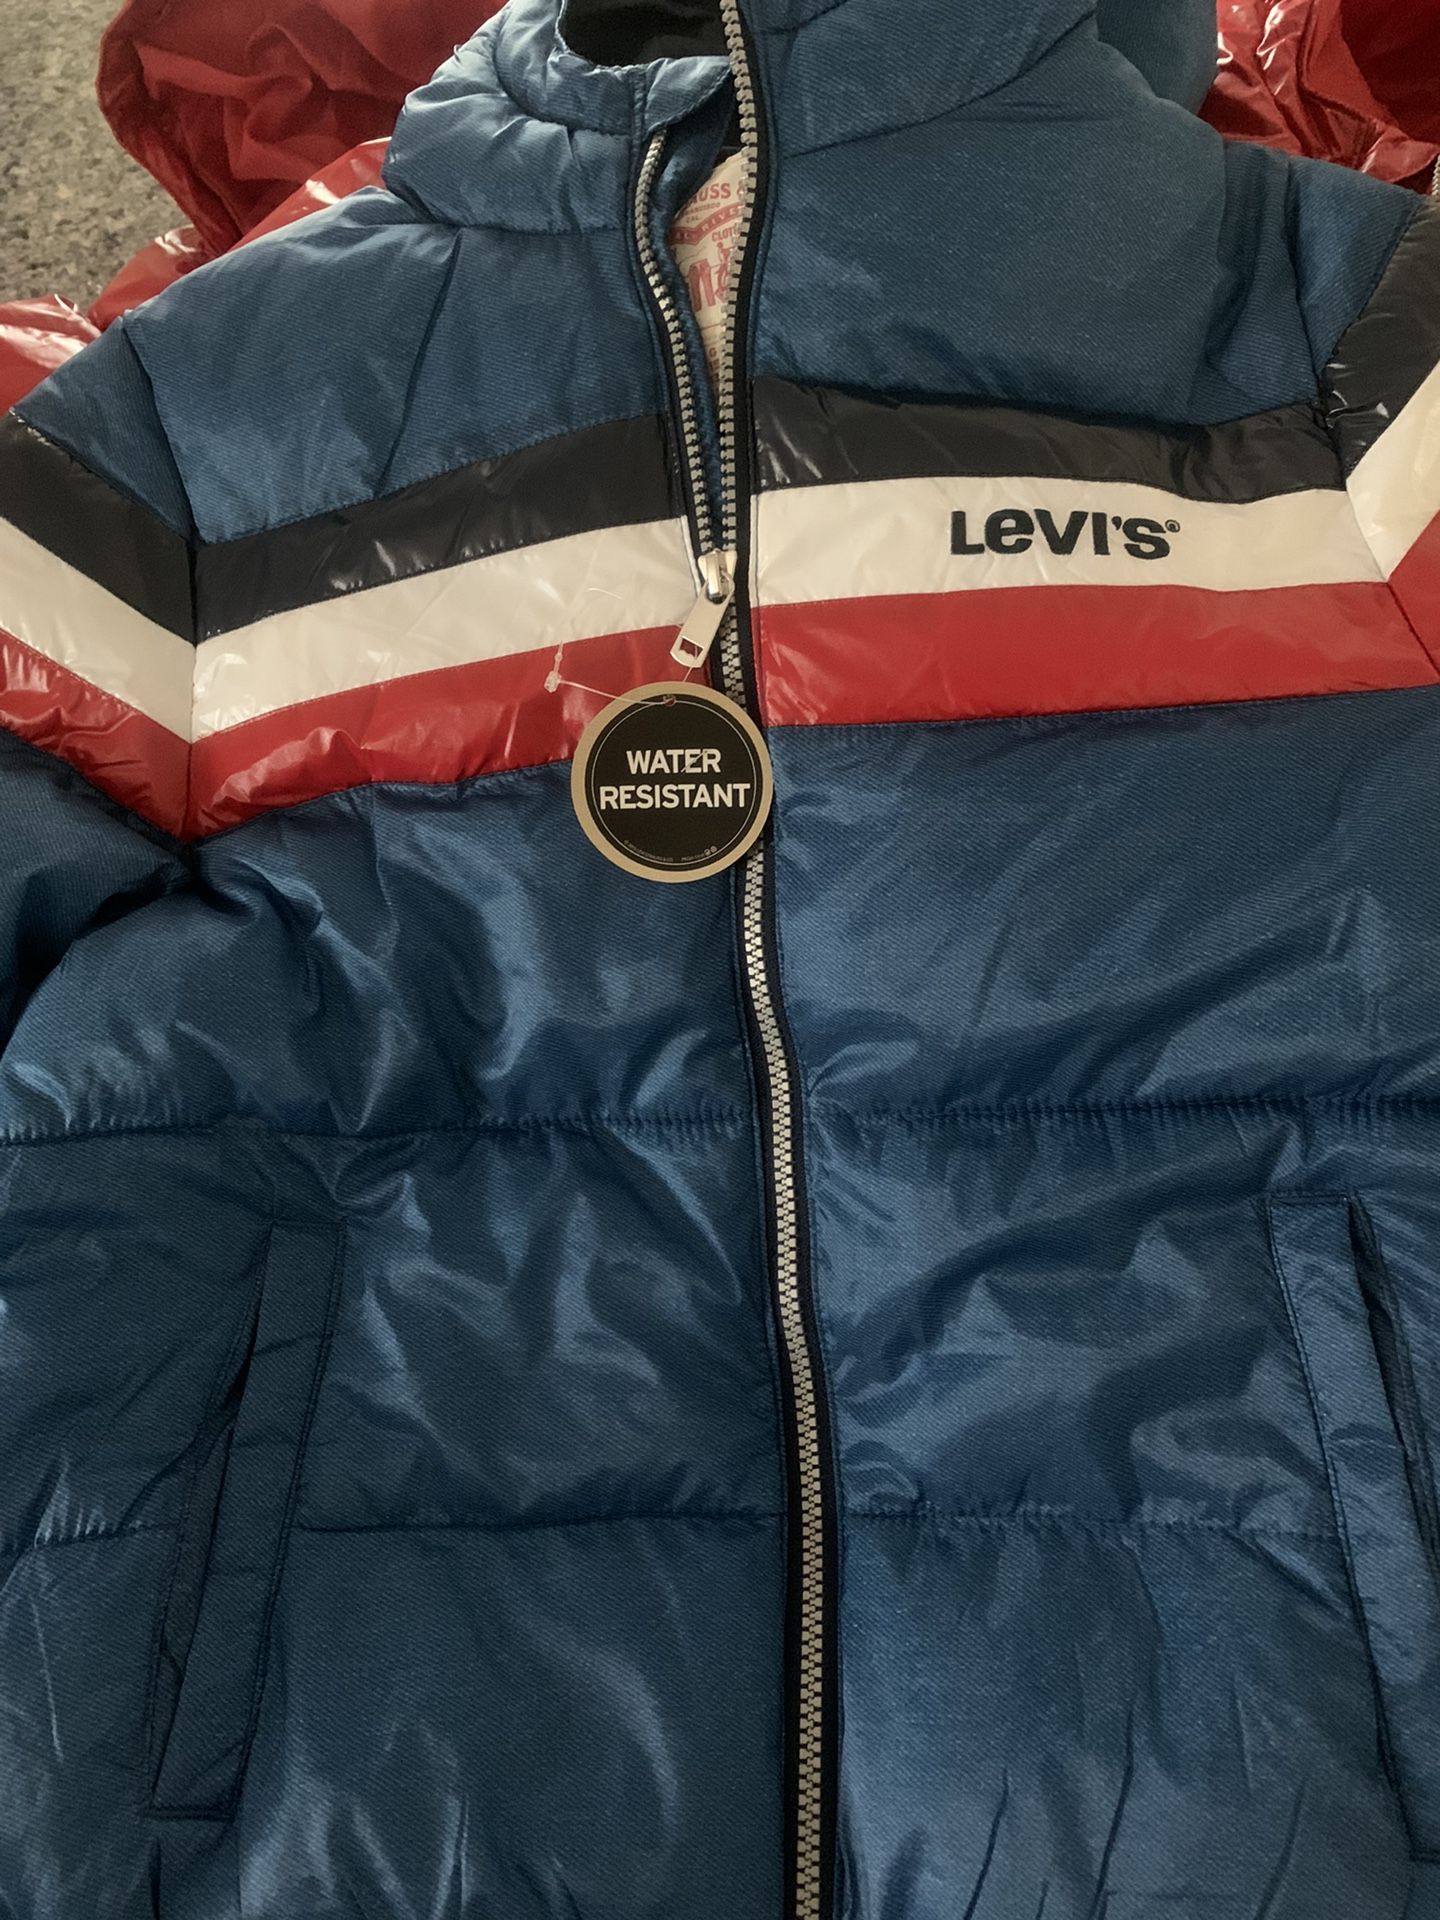 Levi’s Kids Youth Size Jacket 